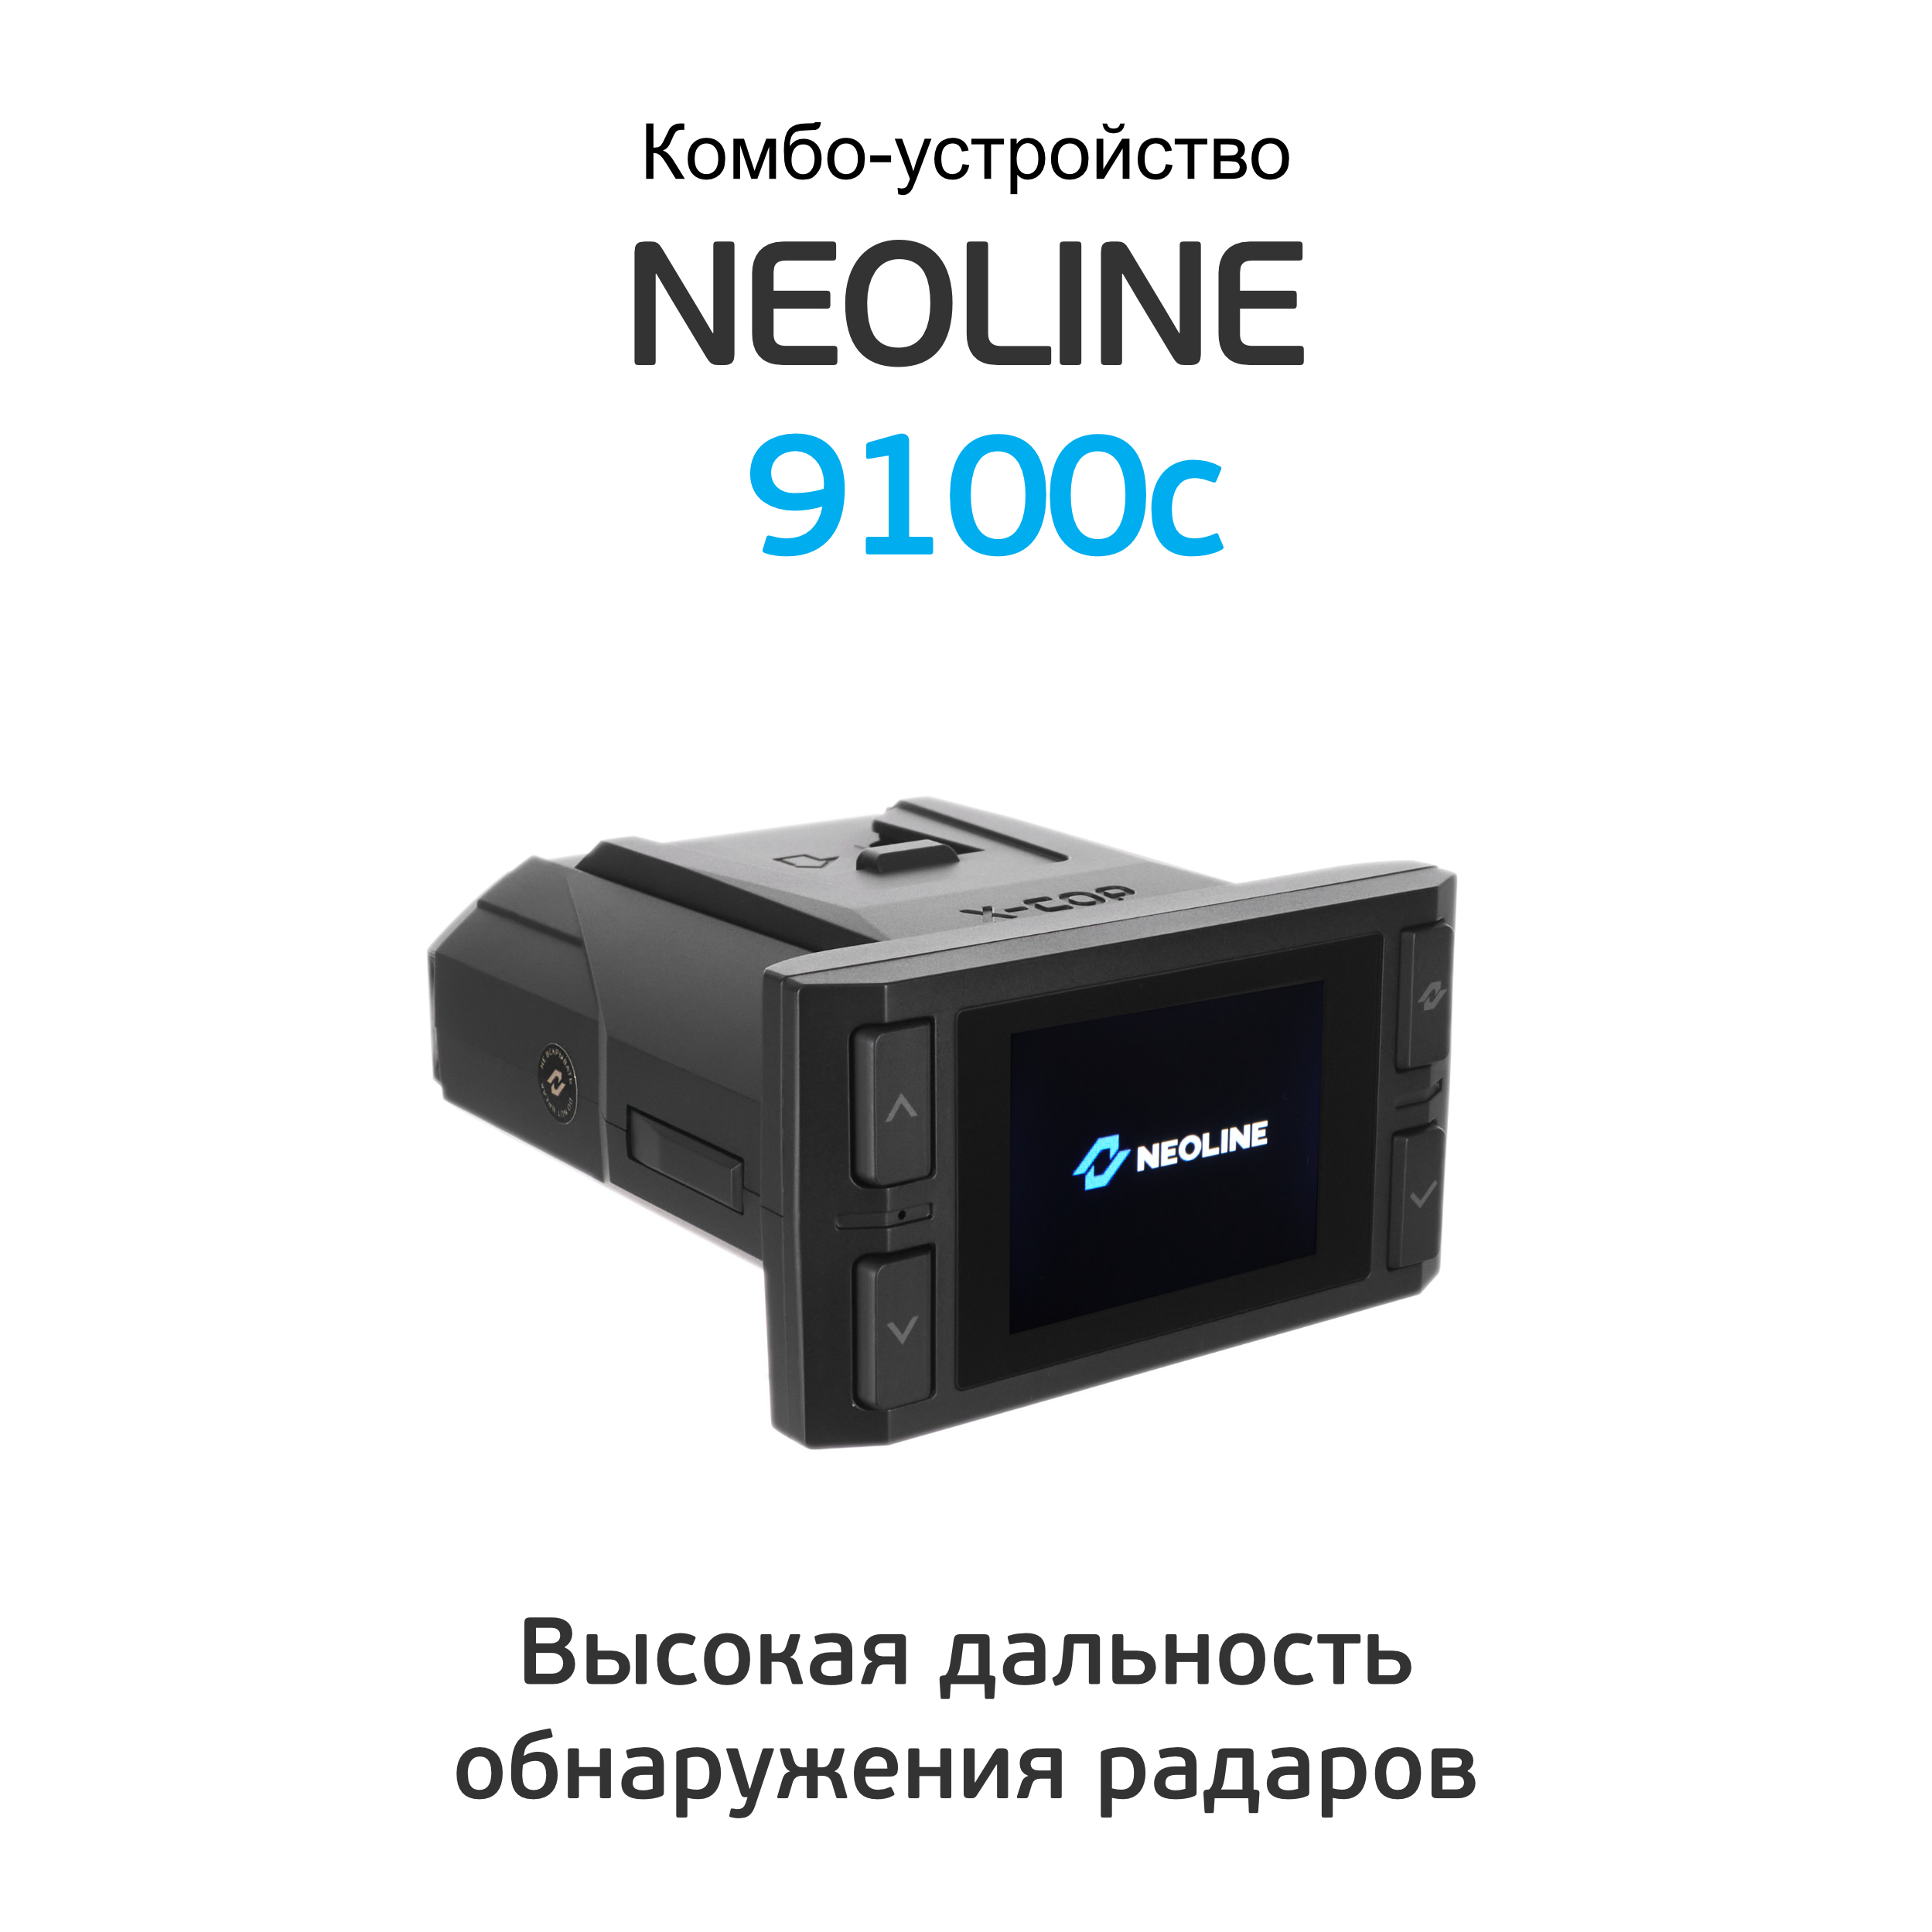 Neoline x cop 9100c. Детектора и видеорегистратора Neoline x-cop 9100c. Сигнатурный гибрид Neoline x-cop 9100x. Видеорегистратор автомобильный с радар детектором neolihex-cop 9100s.